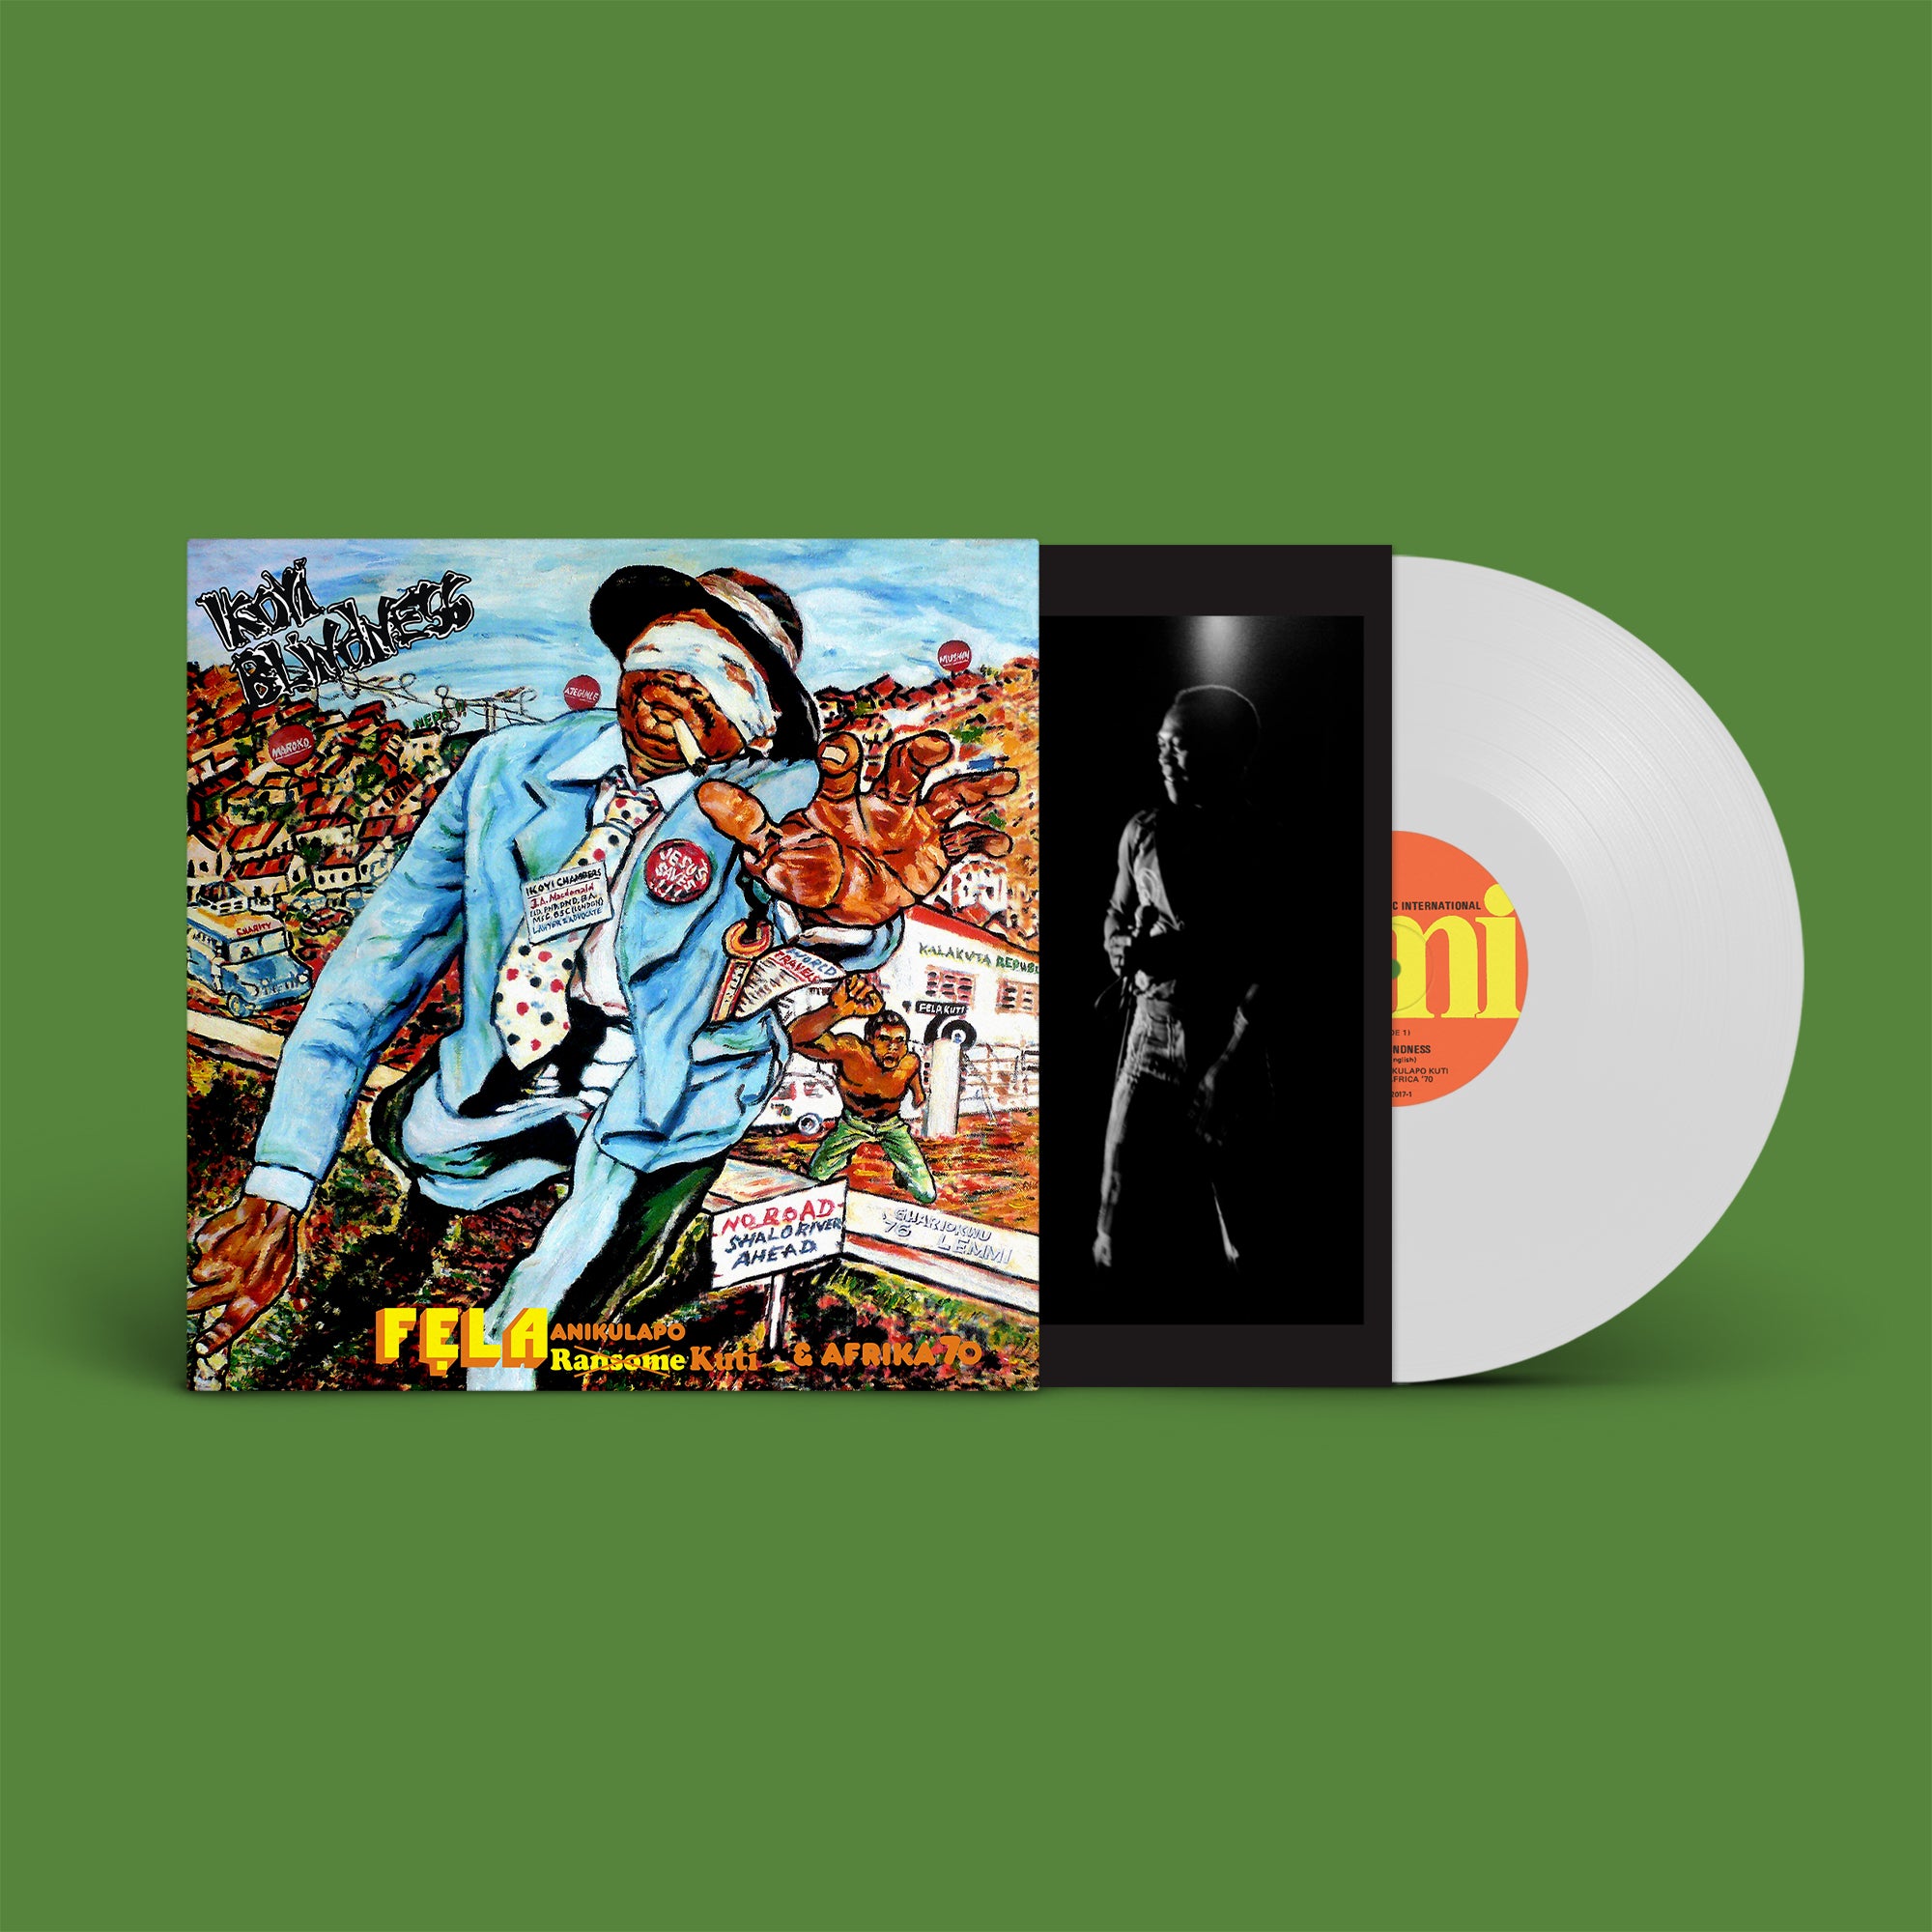 Fela Kuti - Ikoyi Blindness: Opaque White Vinyl 12" Single